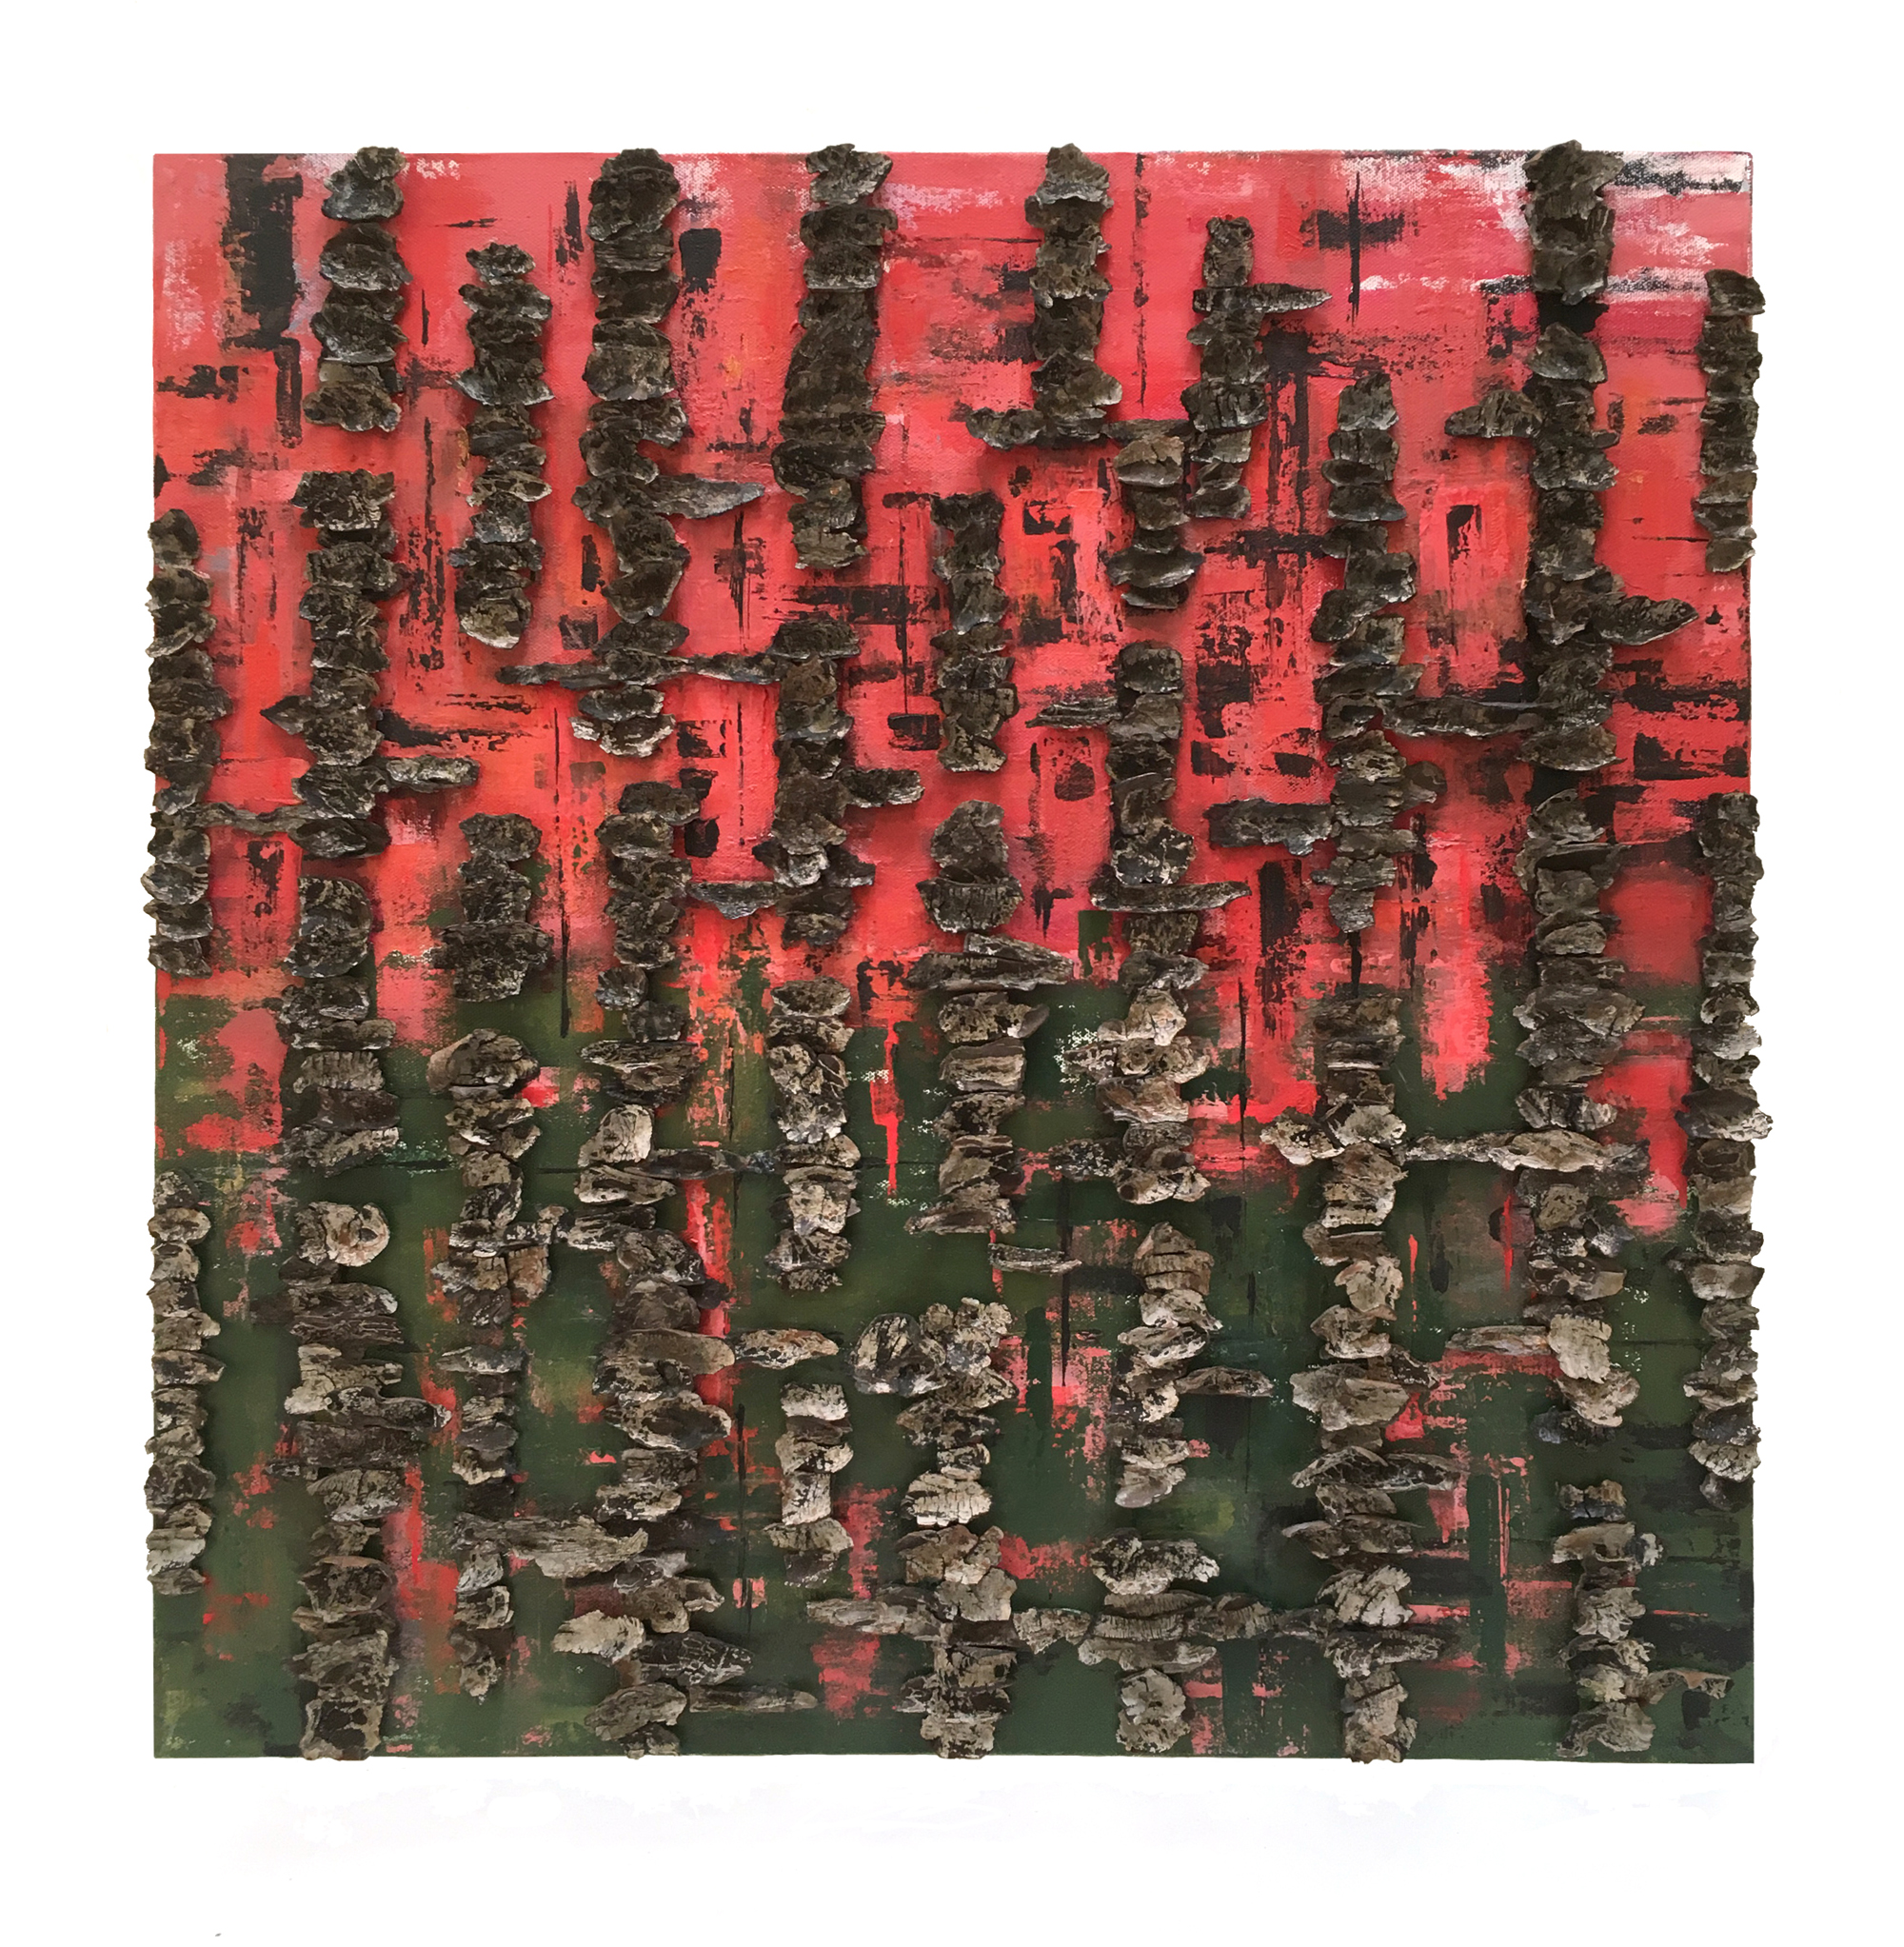   Untitled  bark and acrylic on canvas 24" x 24" 